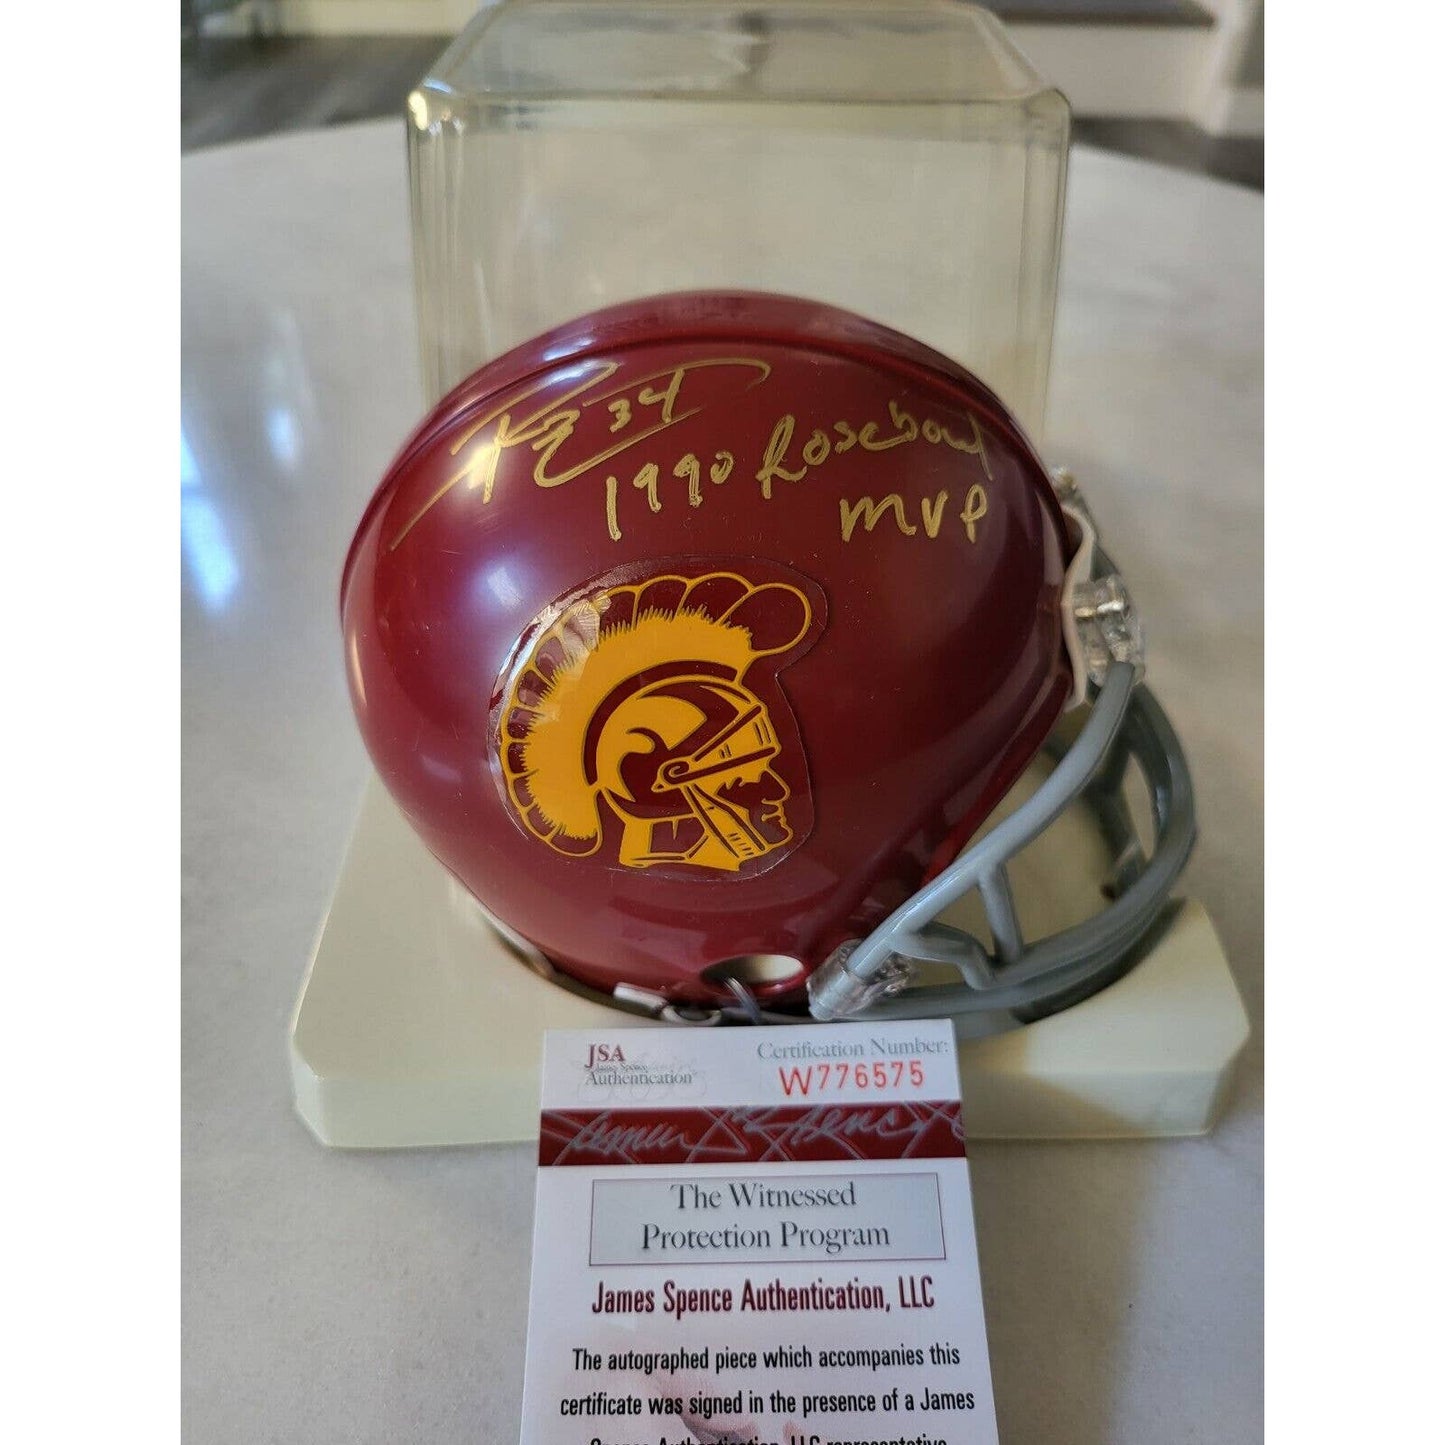 Ricky Ervins Autographed/Signed Mini Helmet JSA COA USC Trojans C - TreasuresEvolved